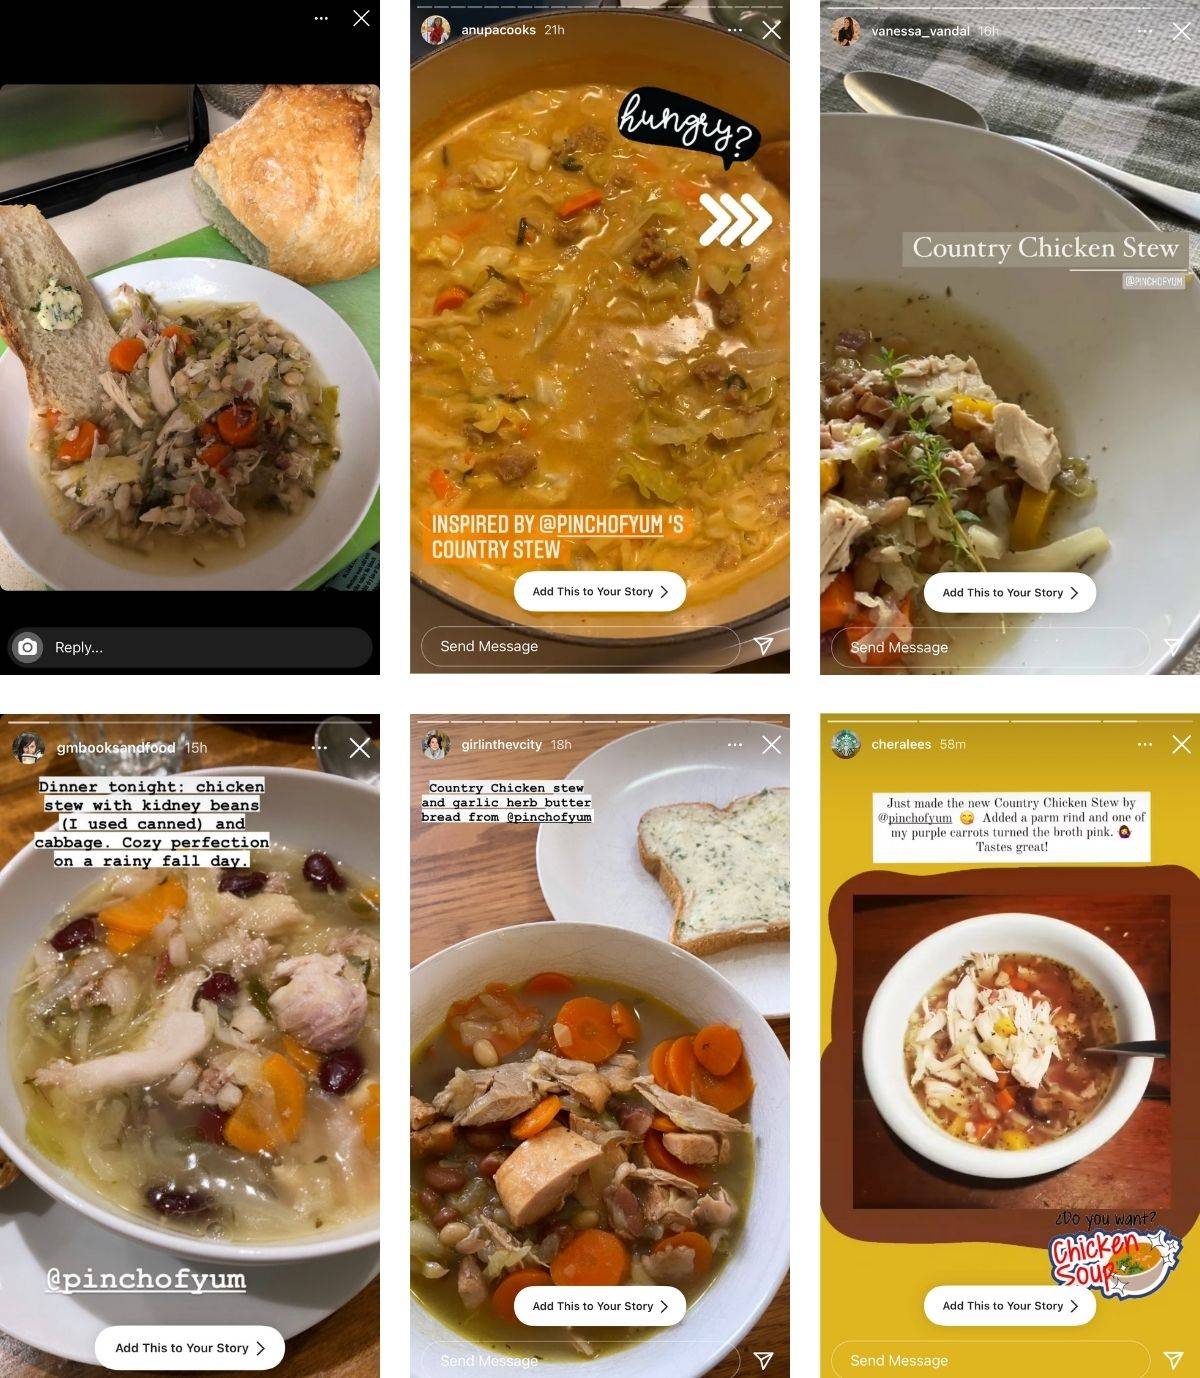 Instagram screenshots of the Country Chicken Stew recipe.